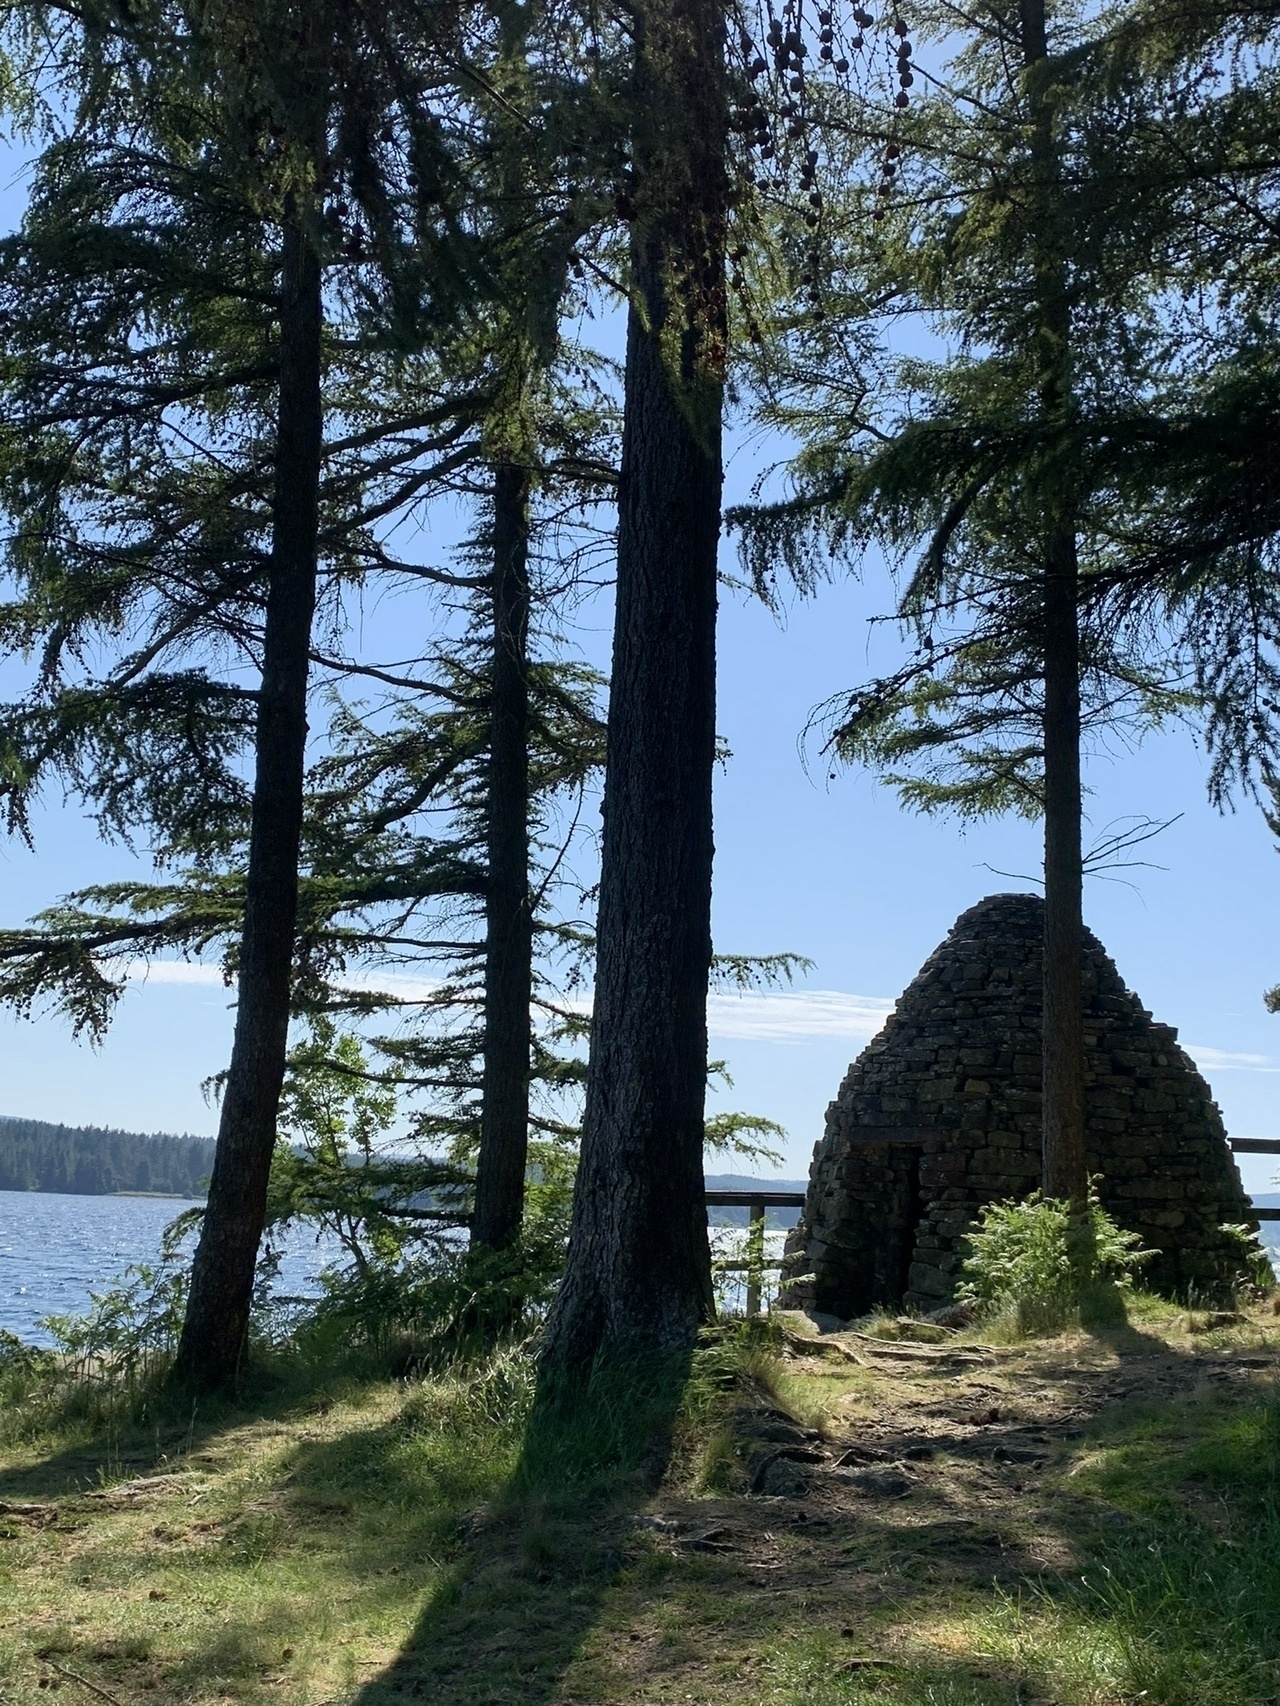 Stone kairn seen through trunks of a few towering pine trees.